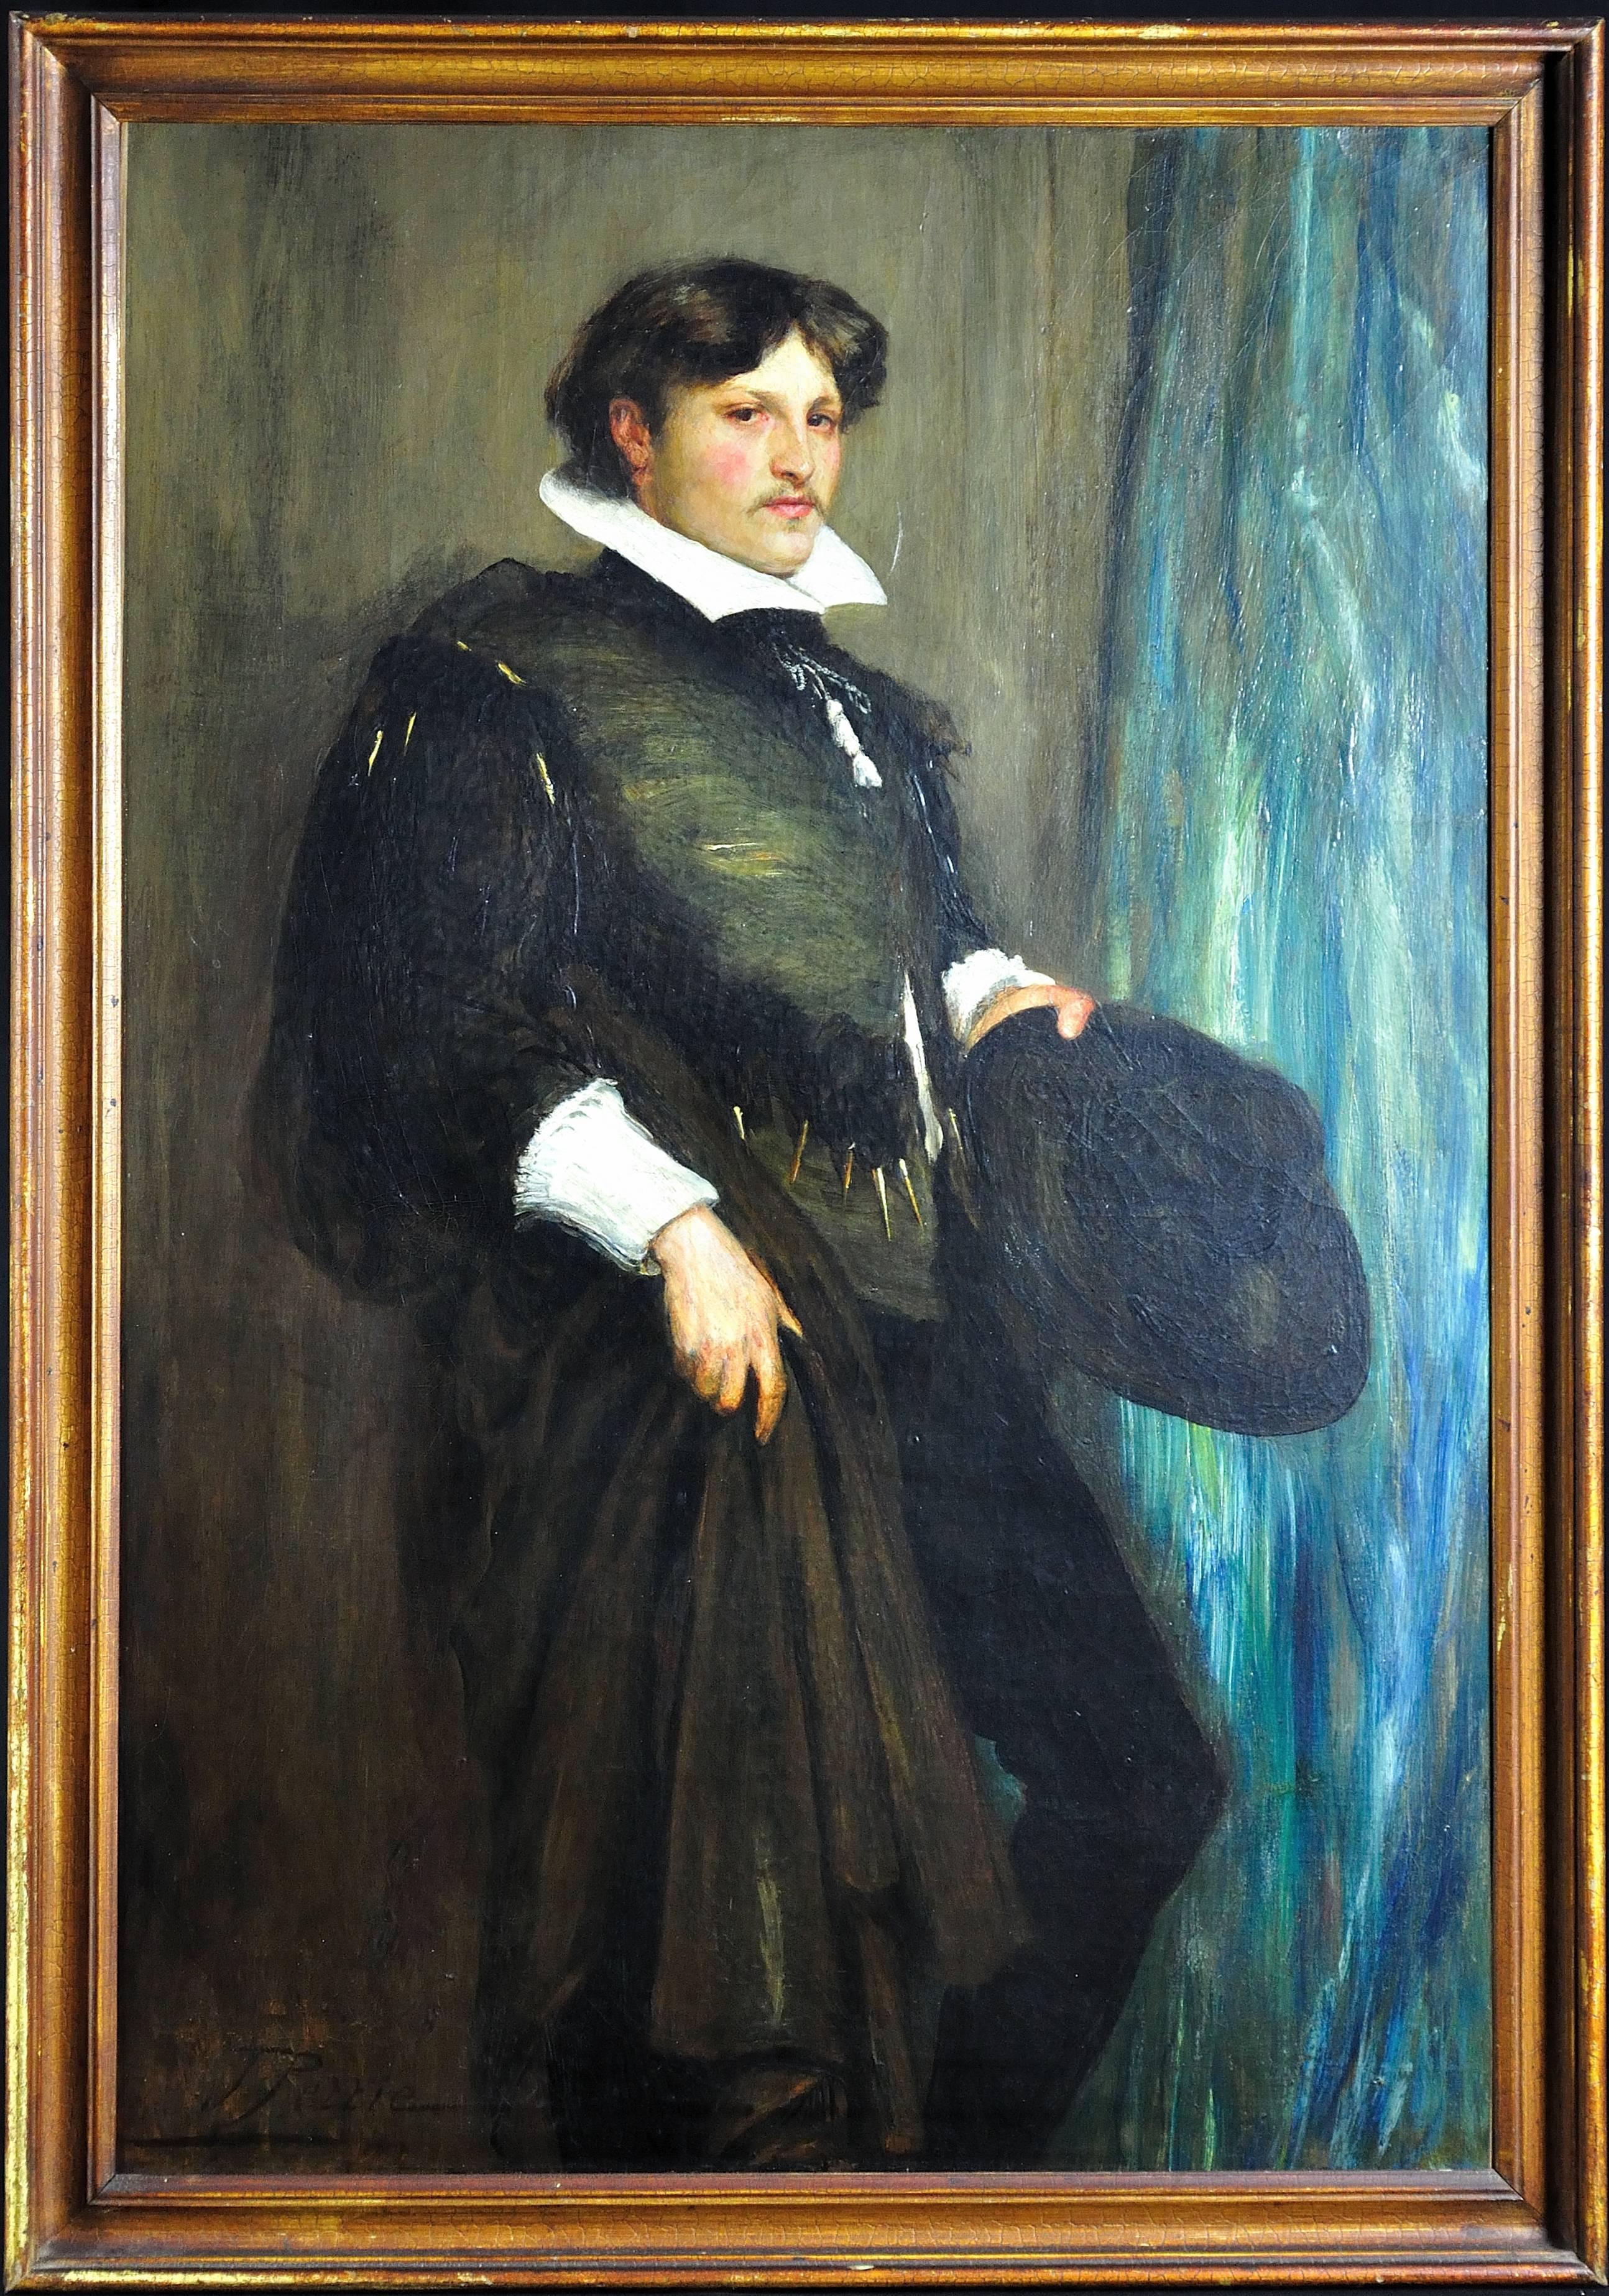 John Pettie Portrait Painting - 1887 Portrait Smith Taylor Whitehead Esq. in Theatrical 16th Century Costume.